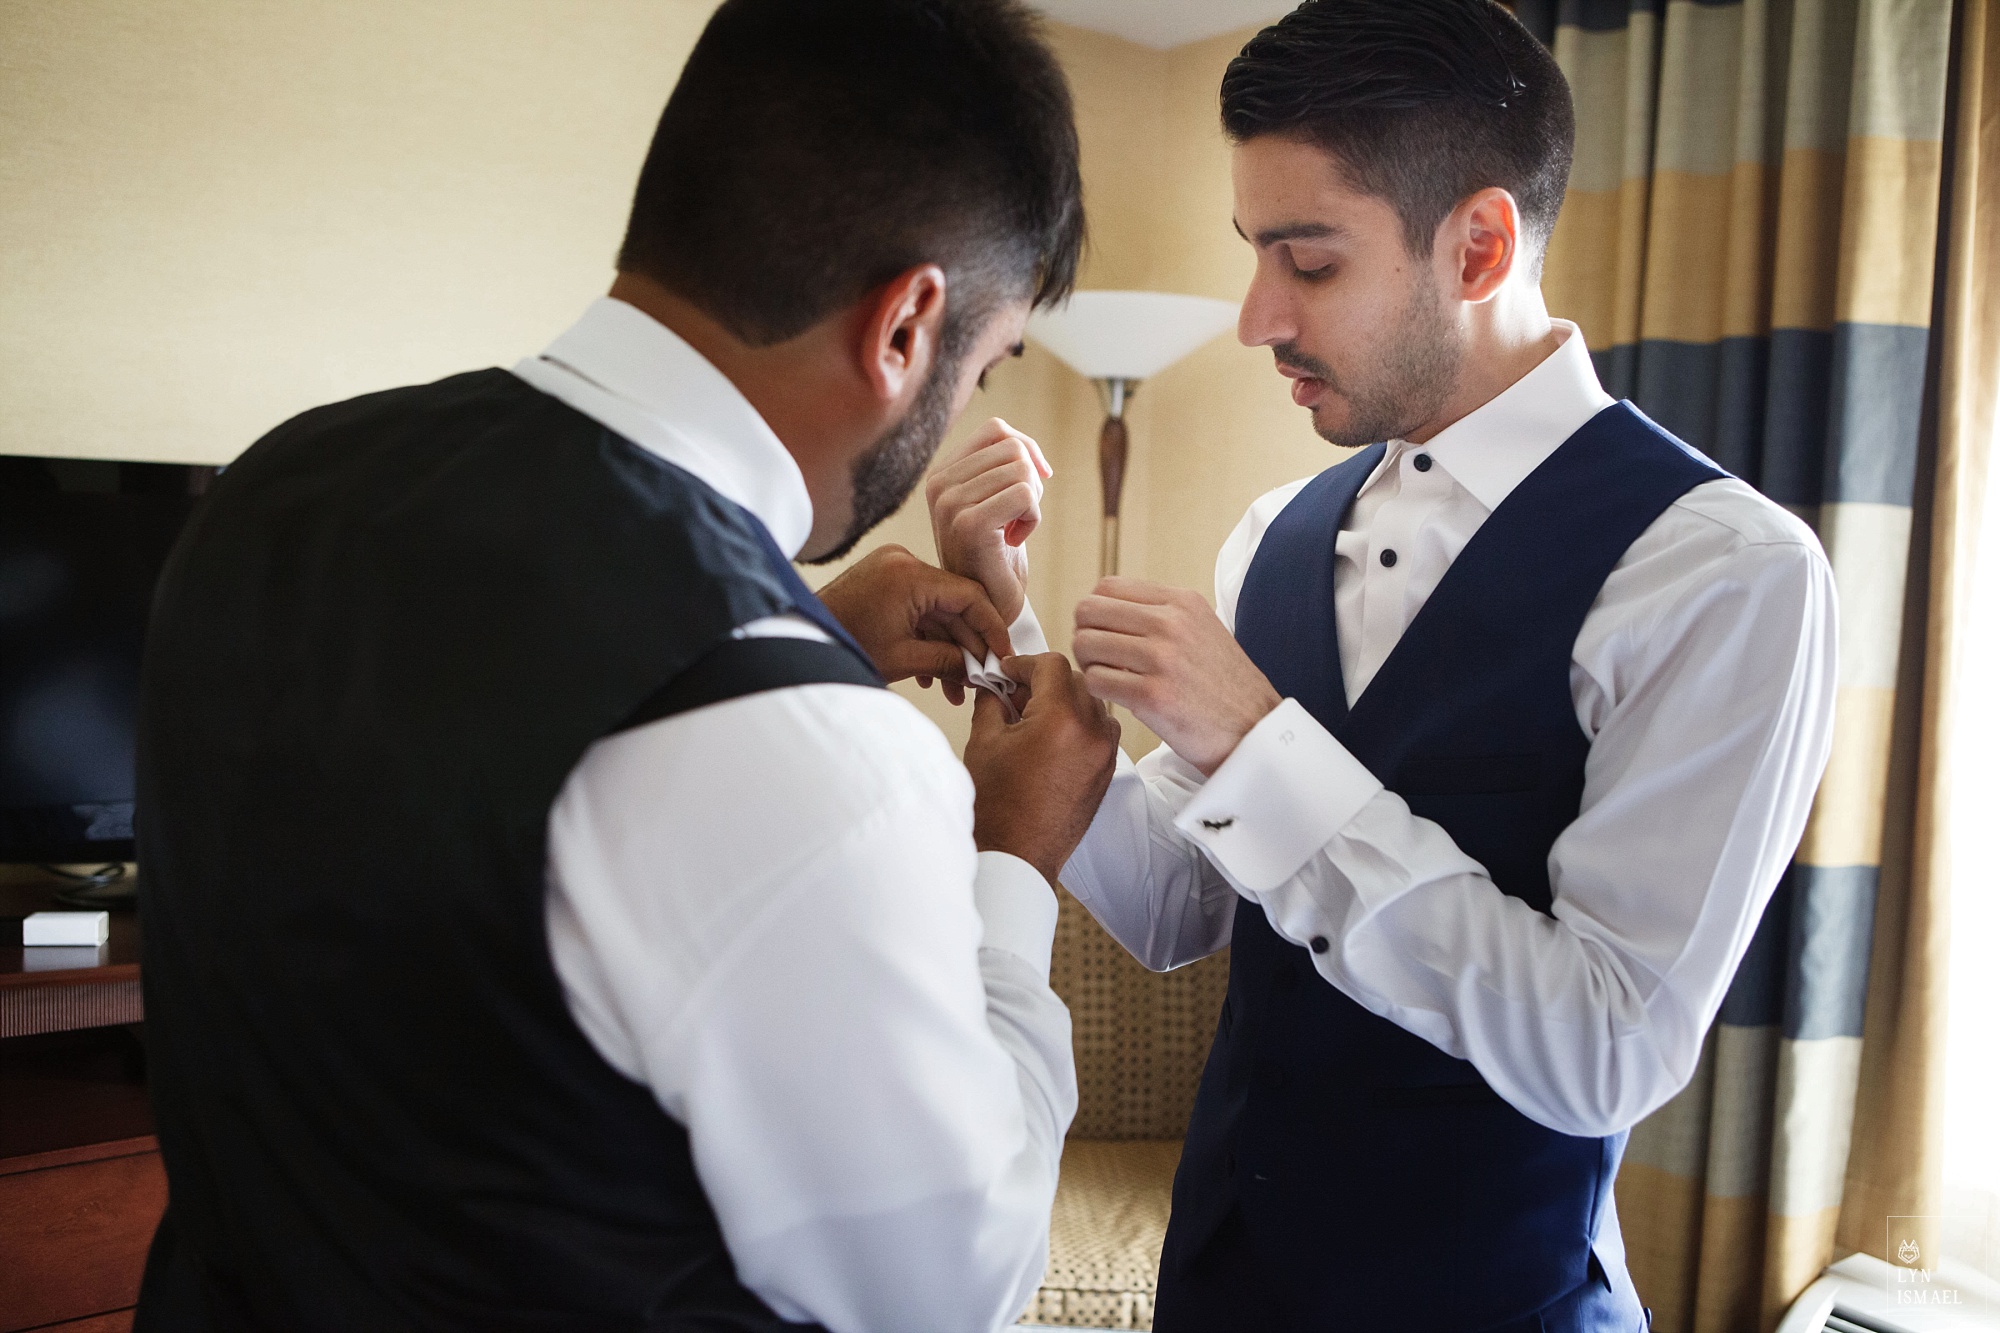 Best Man helps the groom get ready.